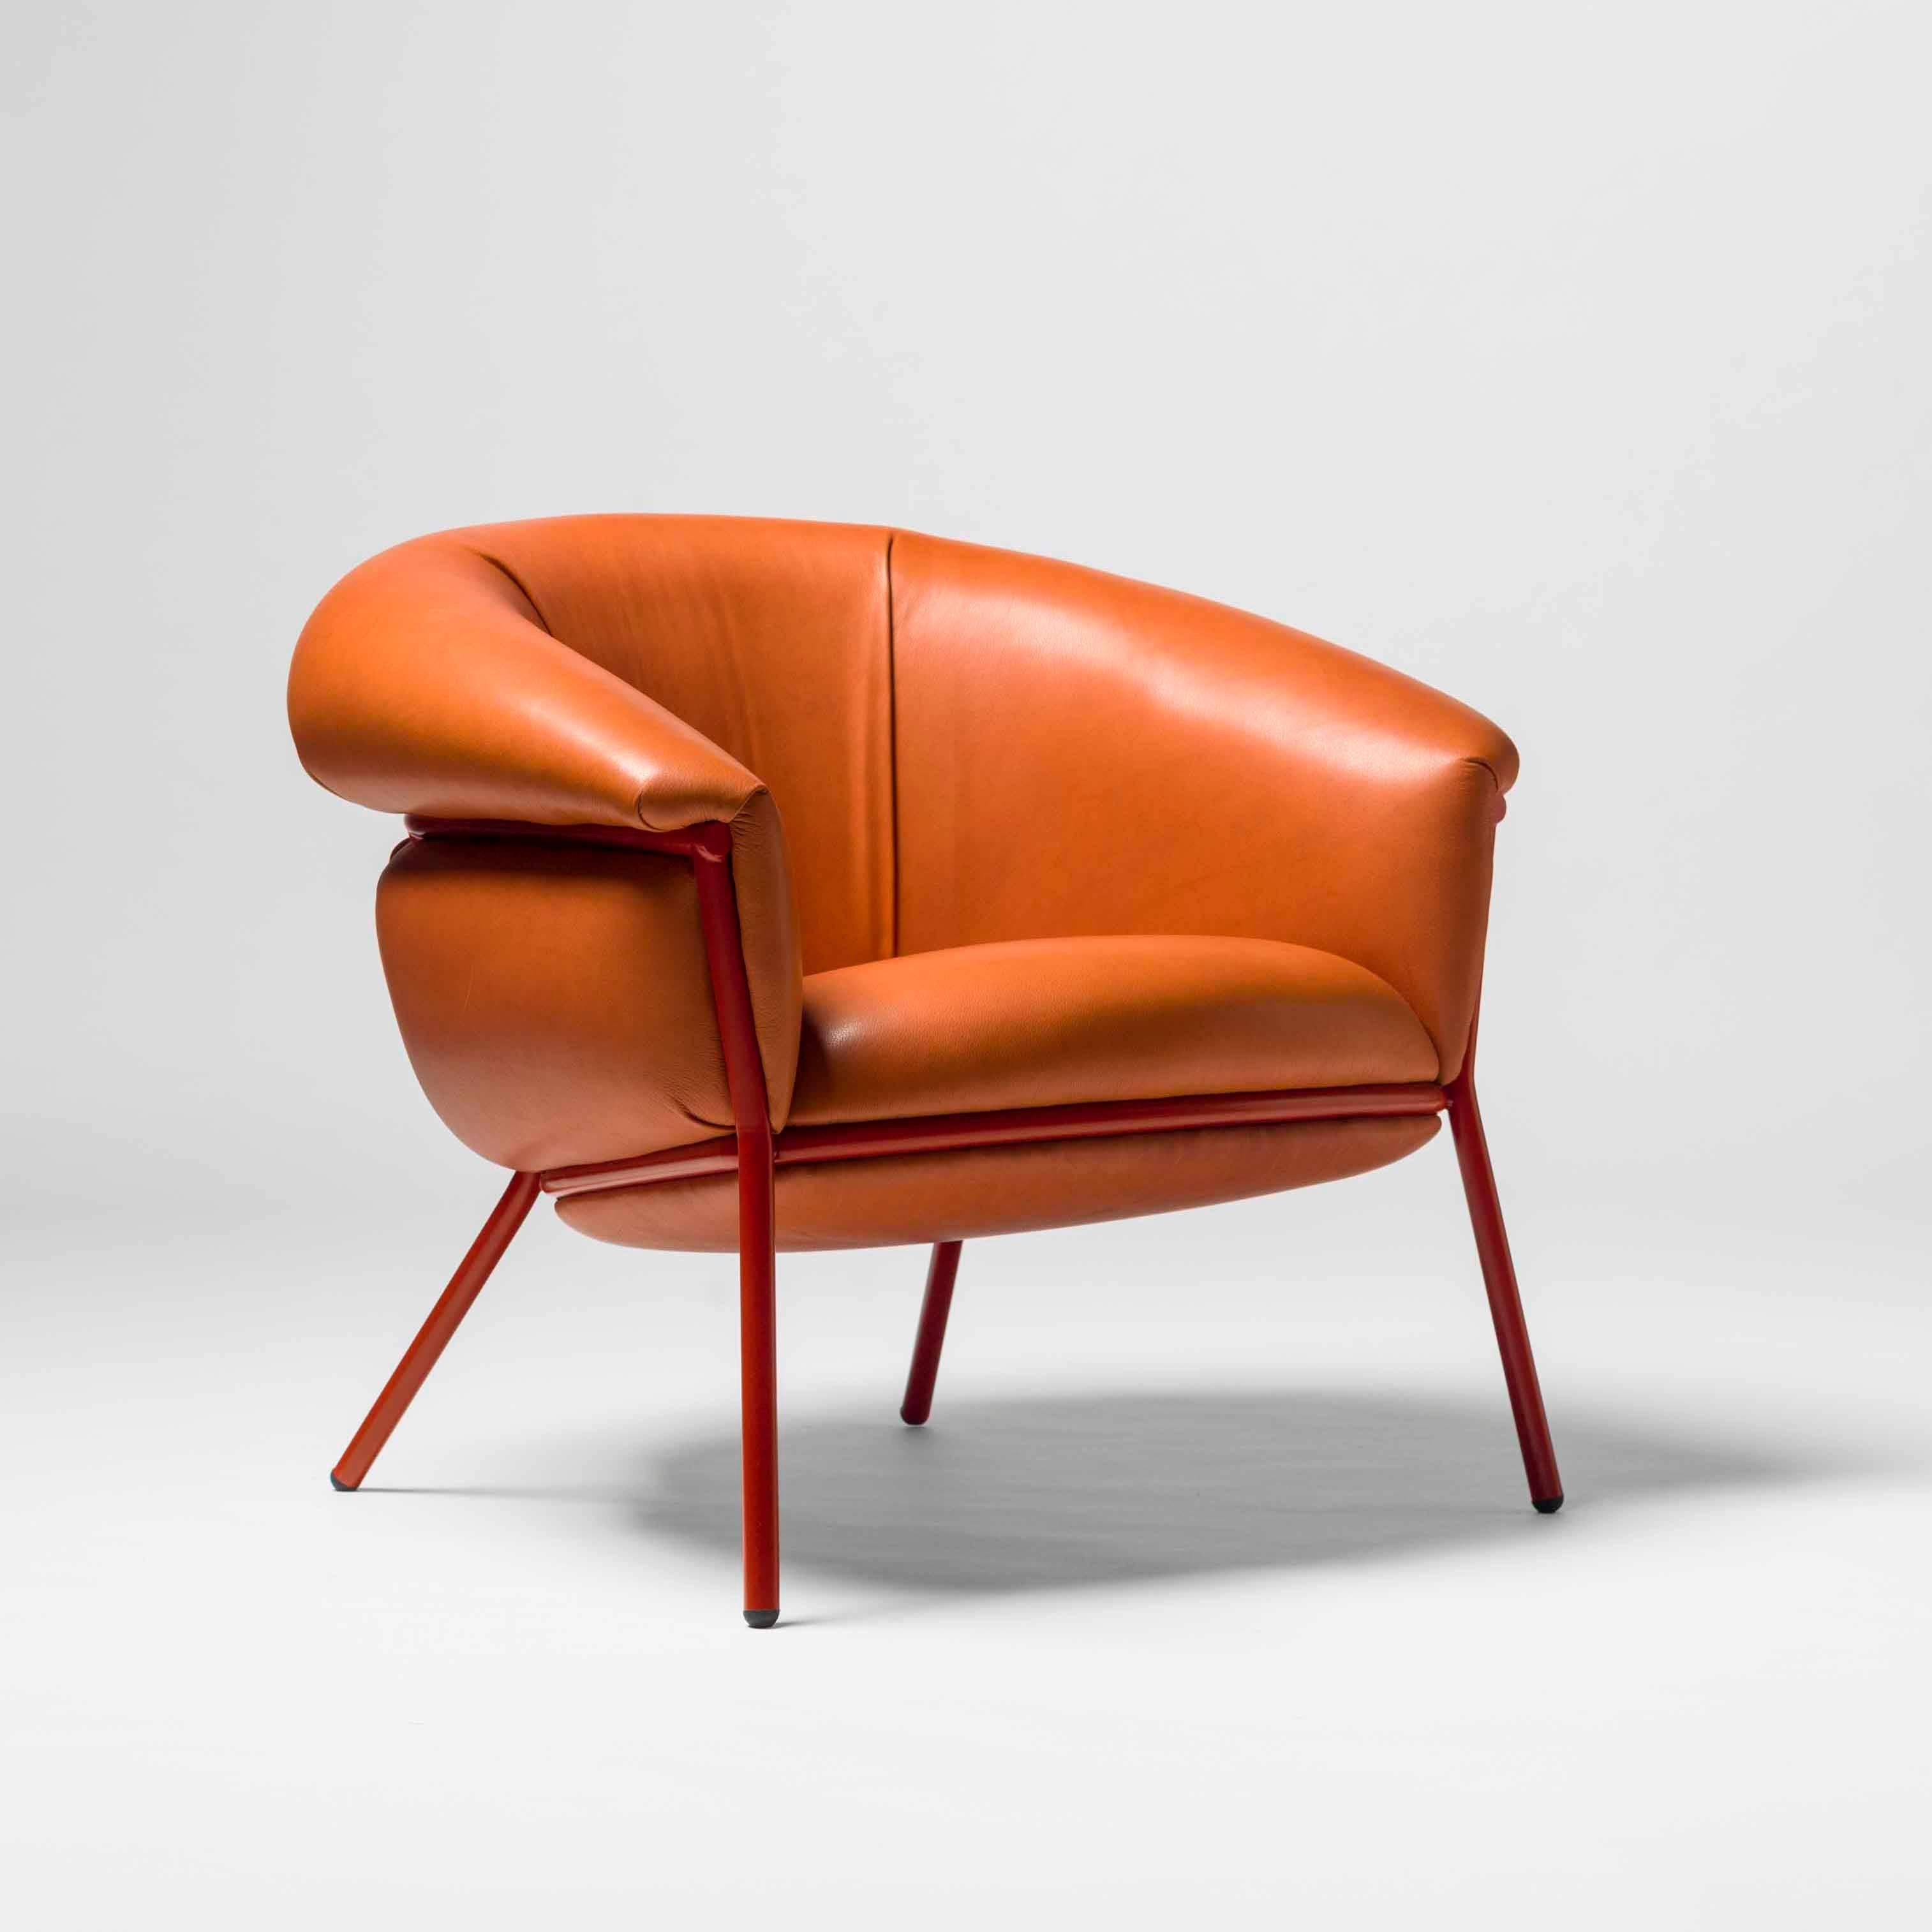 Modern Grasso Armchair by Stephen Burks, Orange for BD For Sale